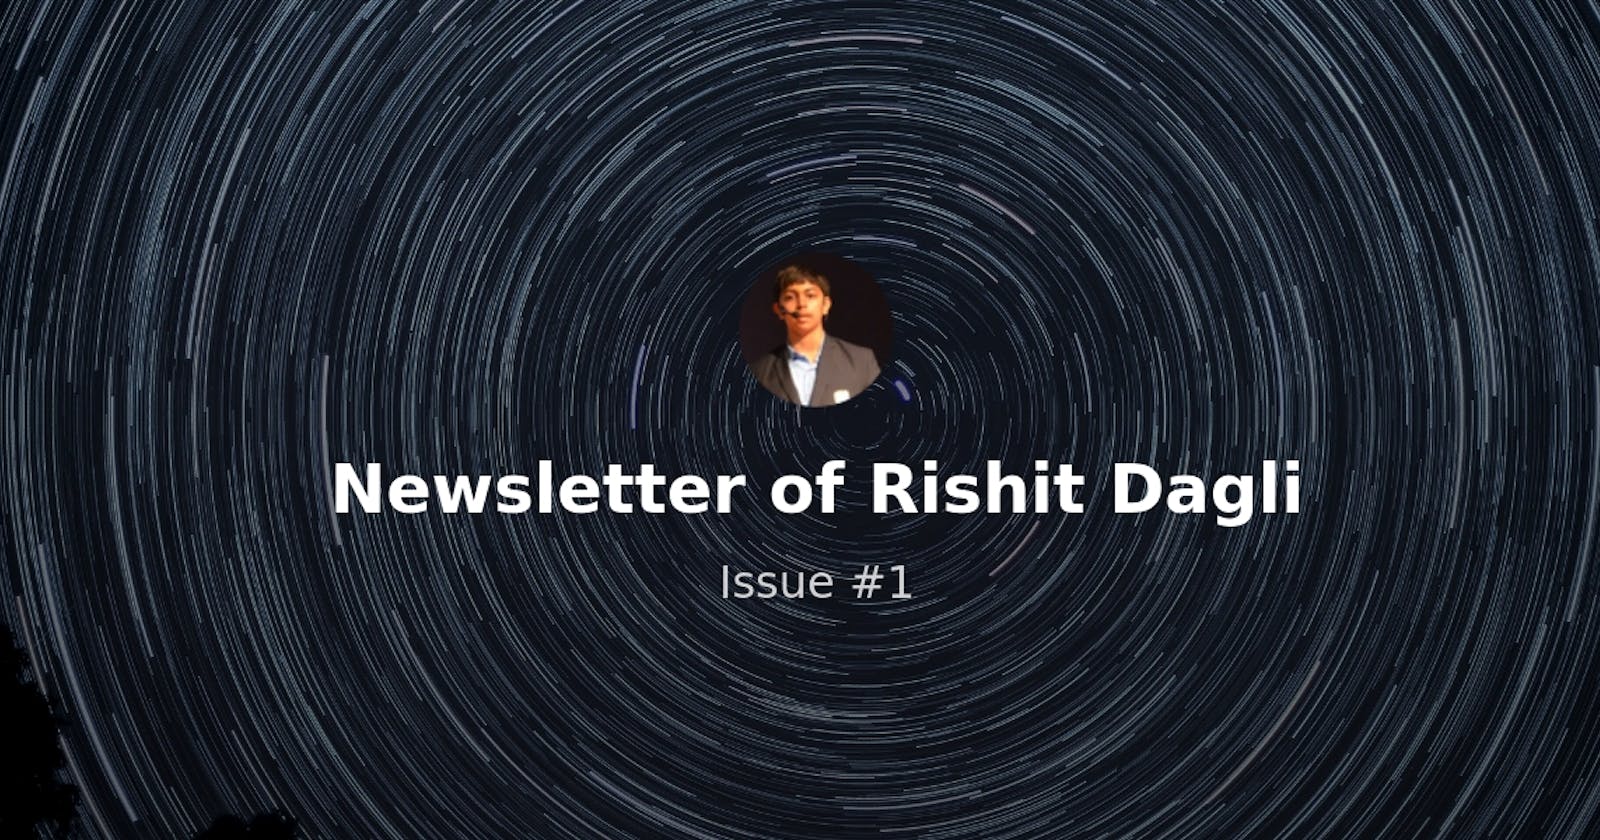 Newsletter of Rishit Dagli - Issue #1